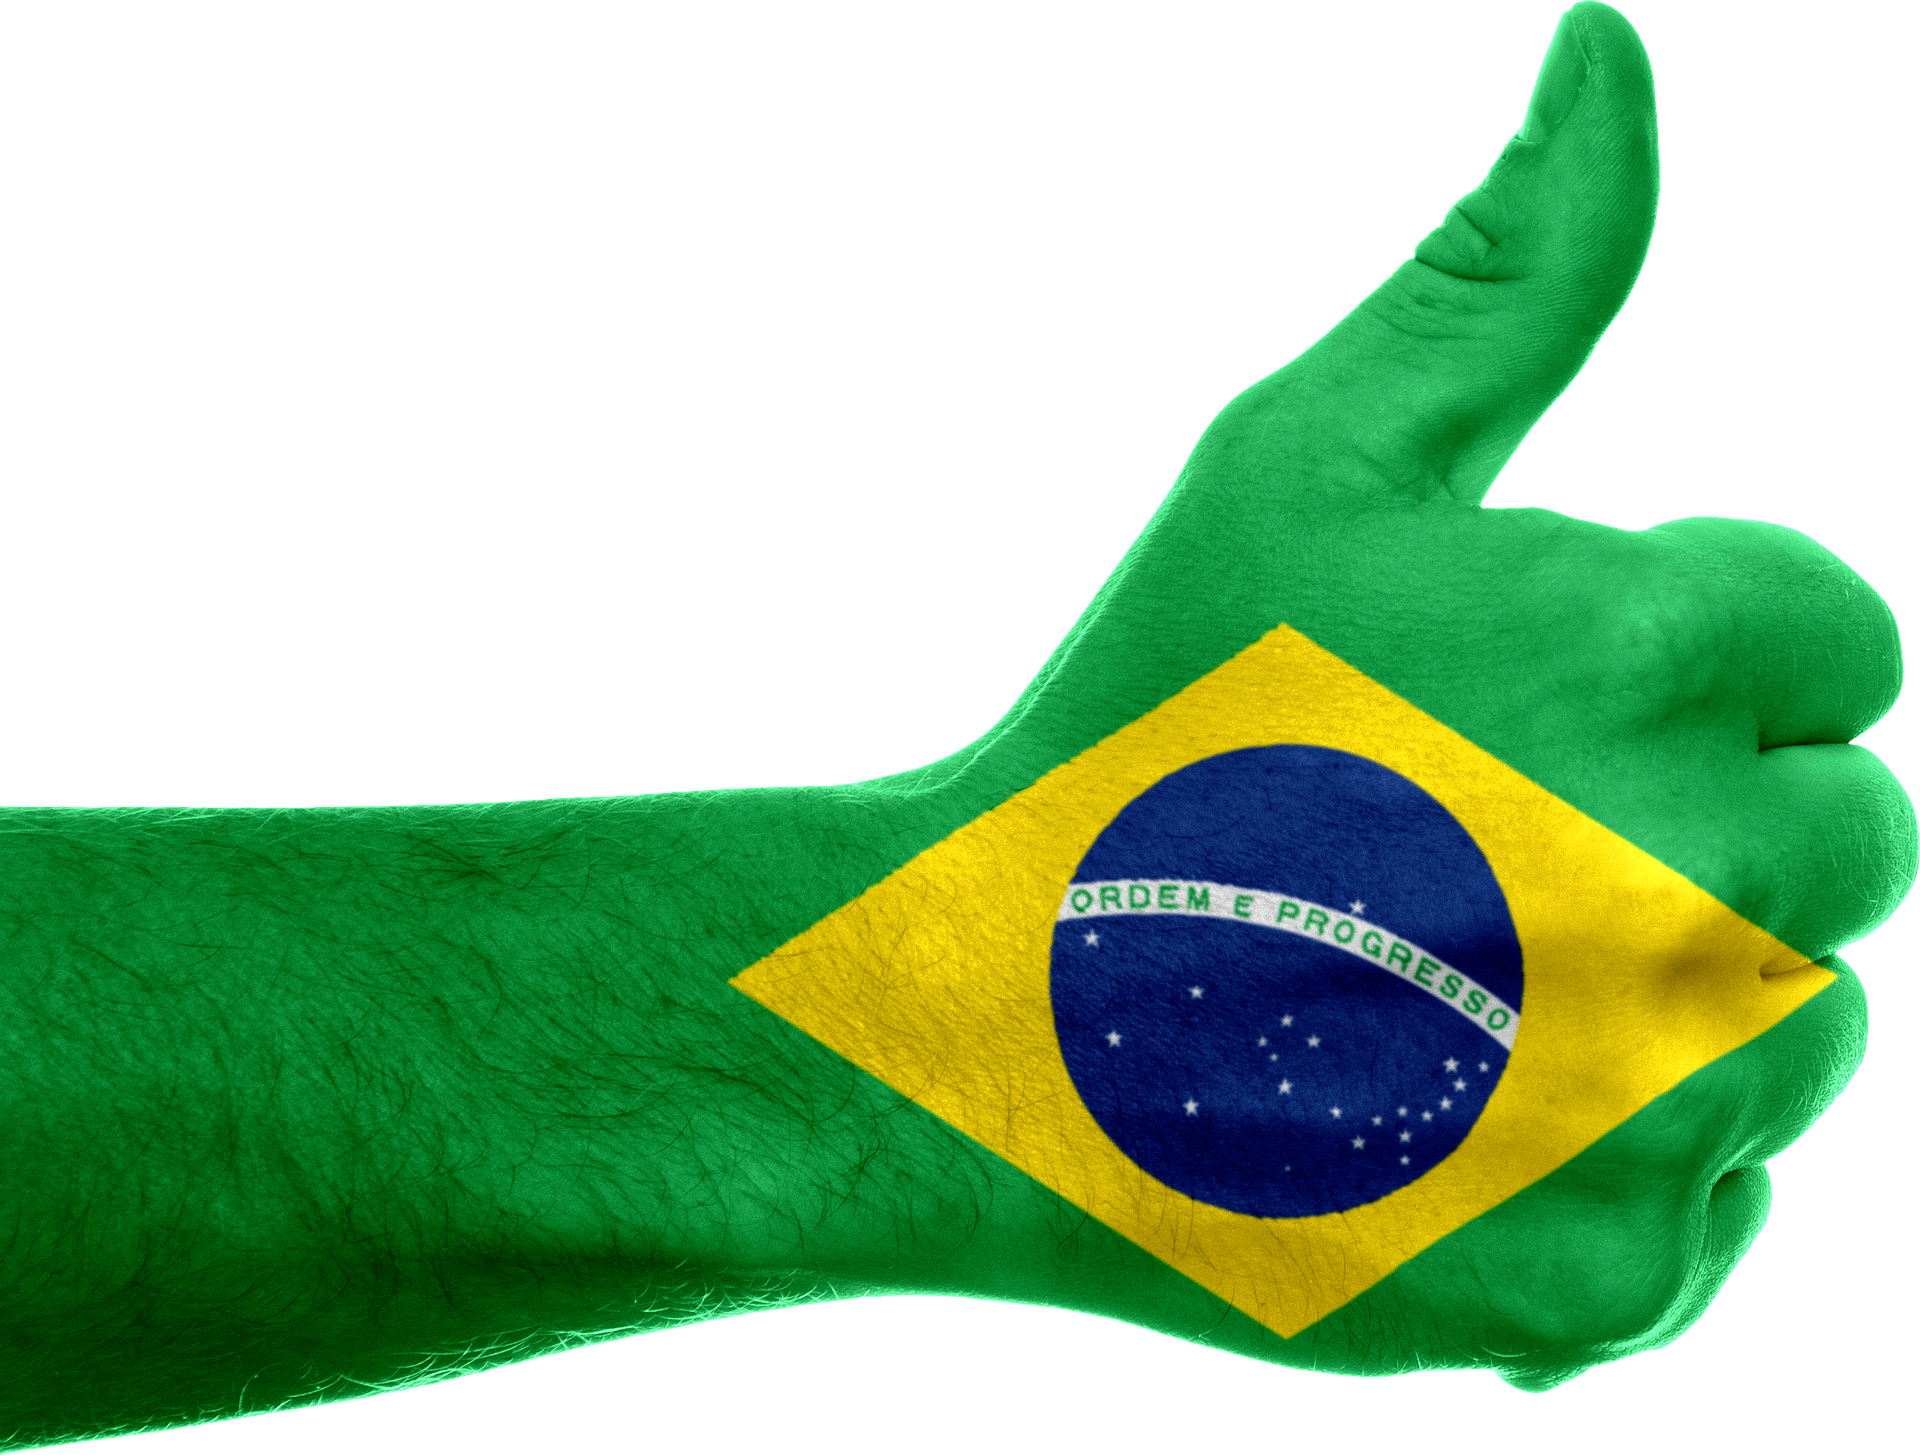 Brazil aims to legalise cannabis